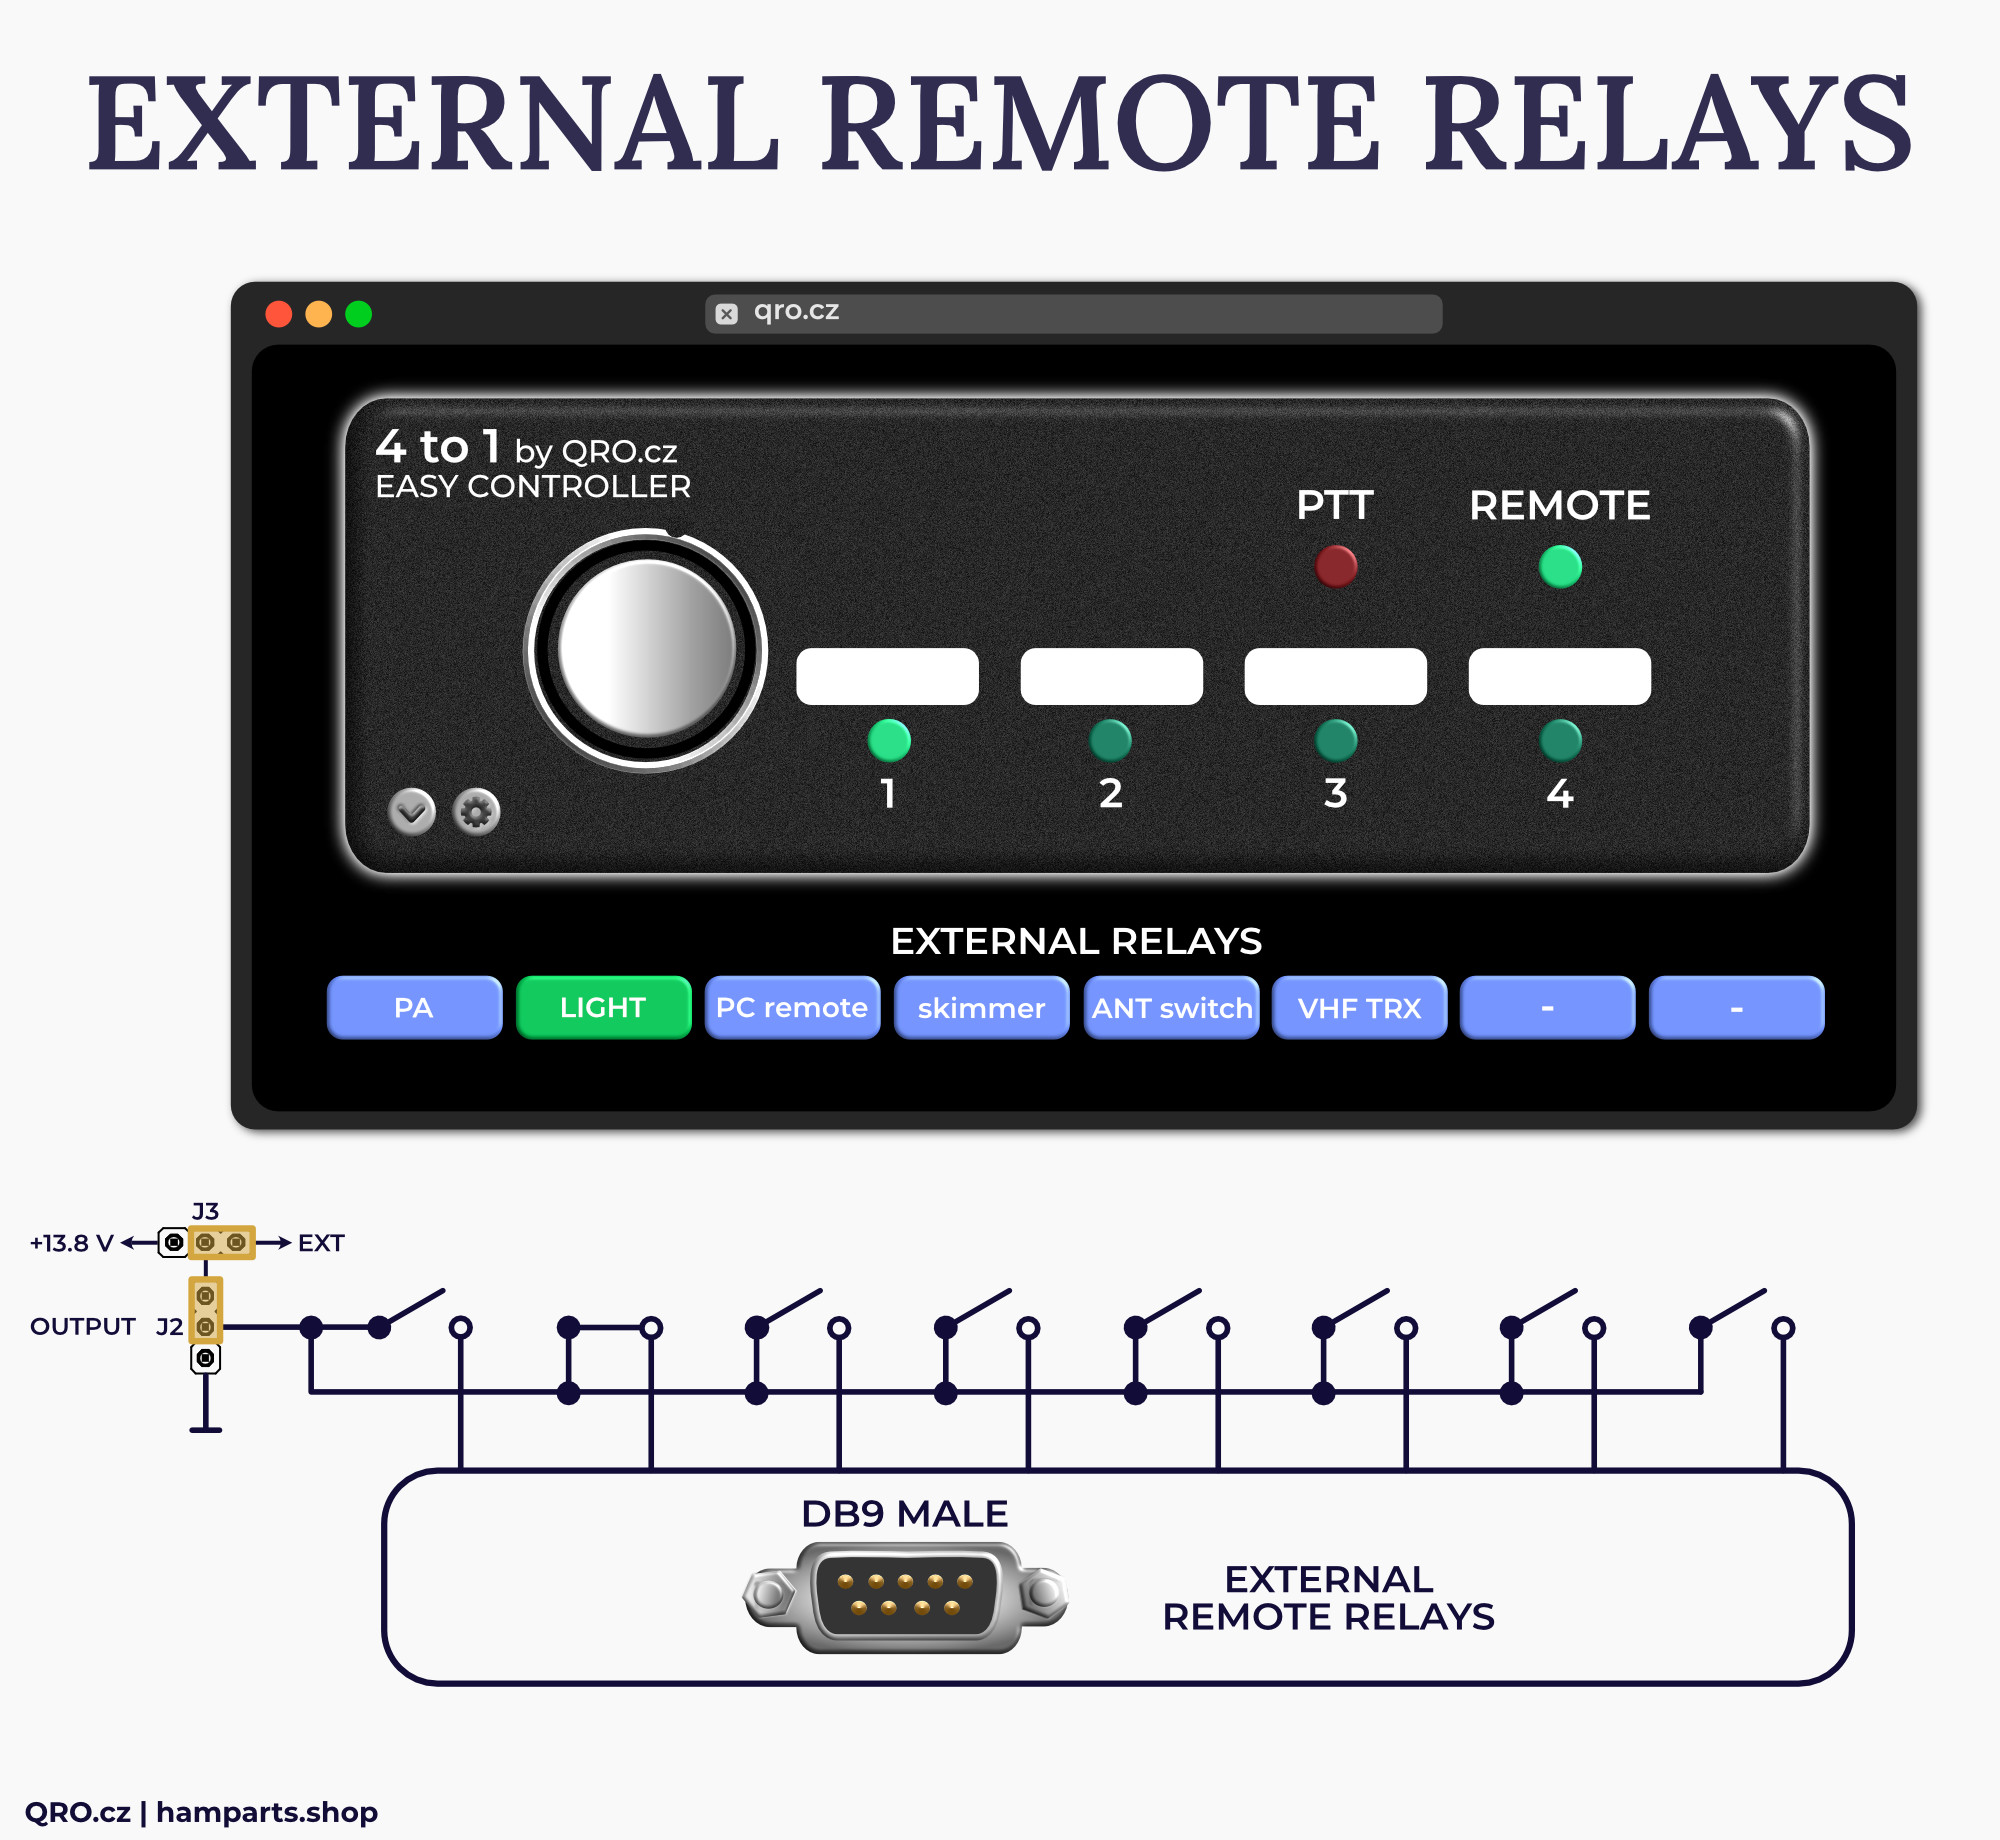 easy controller 4-1 external remote relays qro.cz hamparts.shop